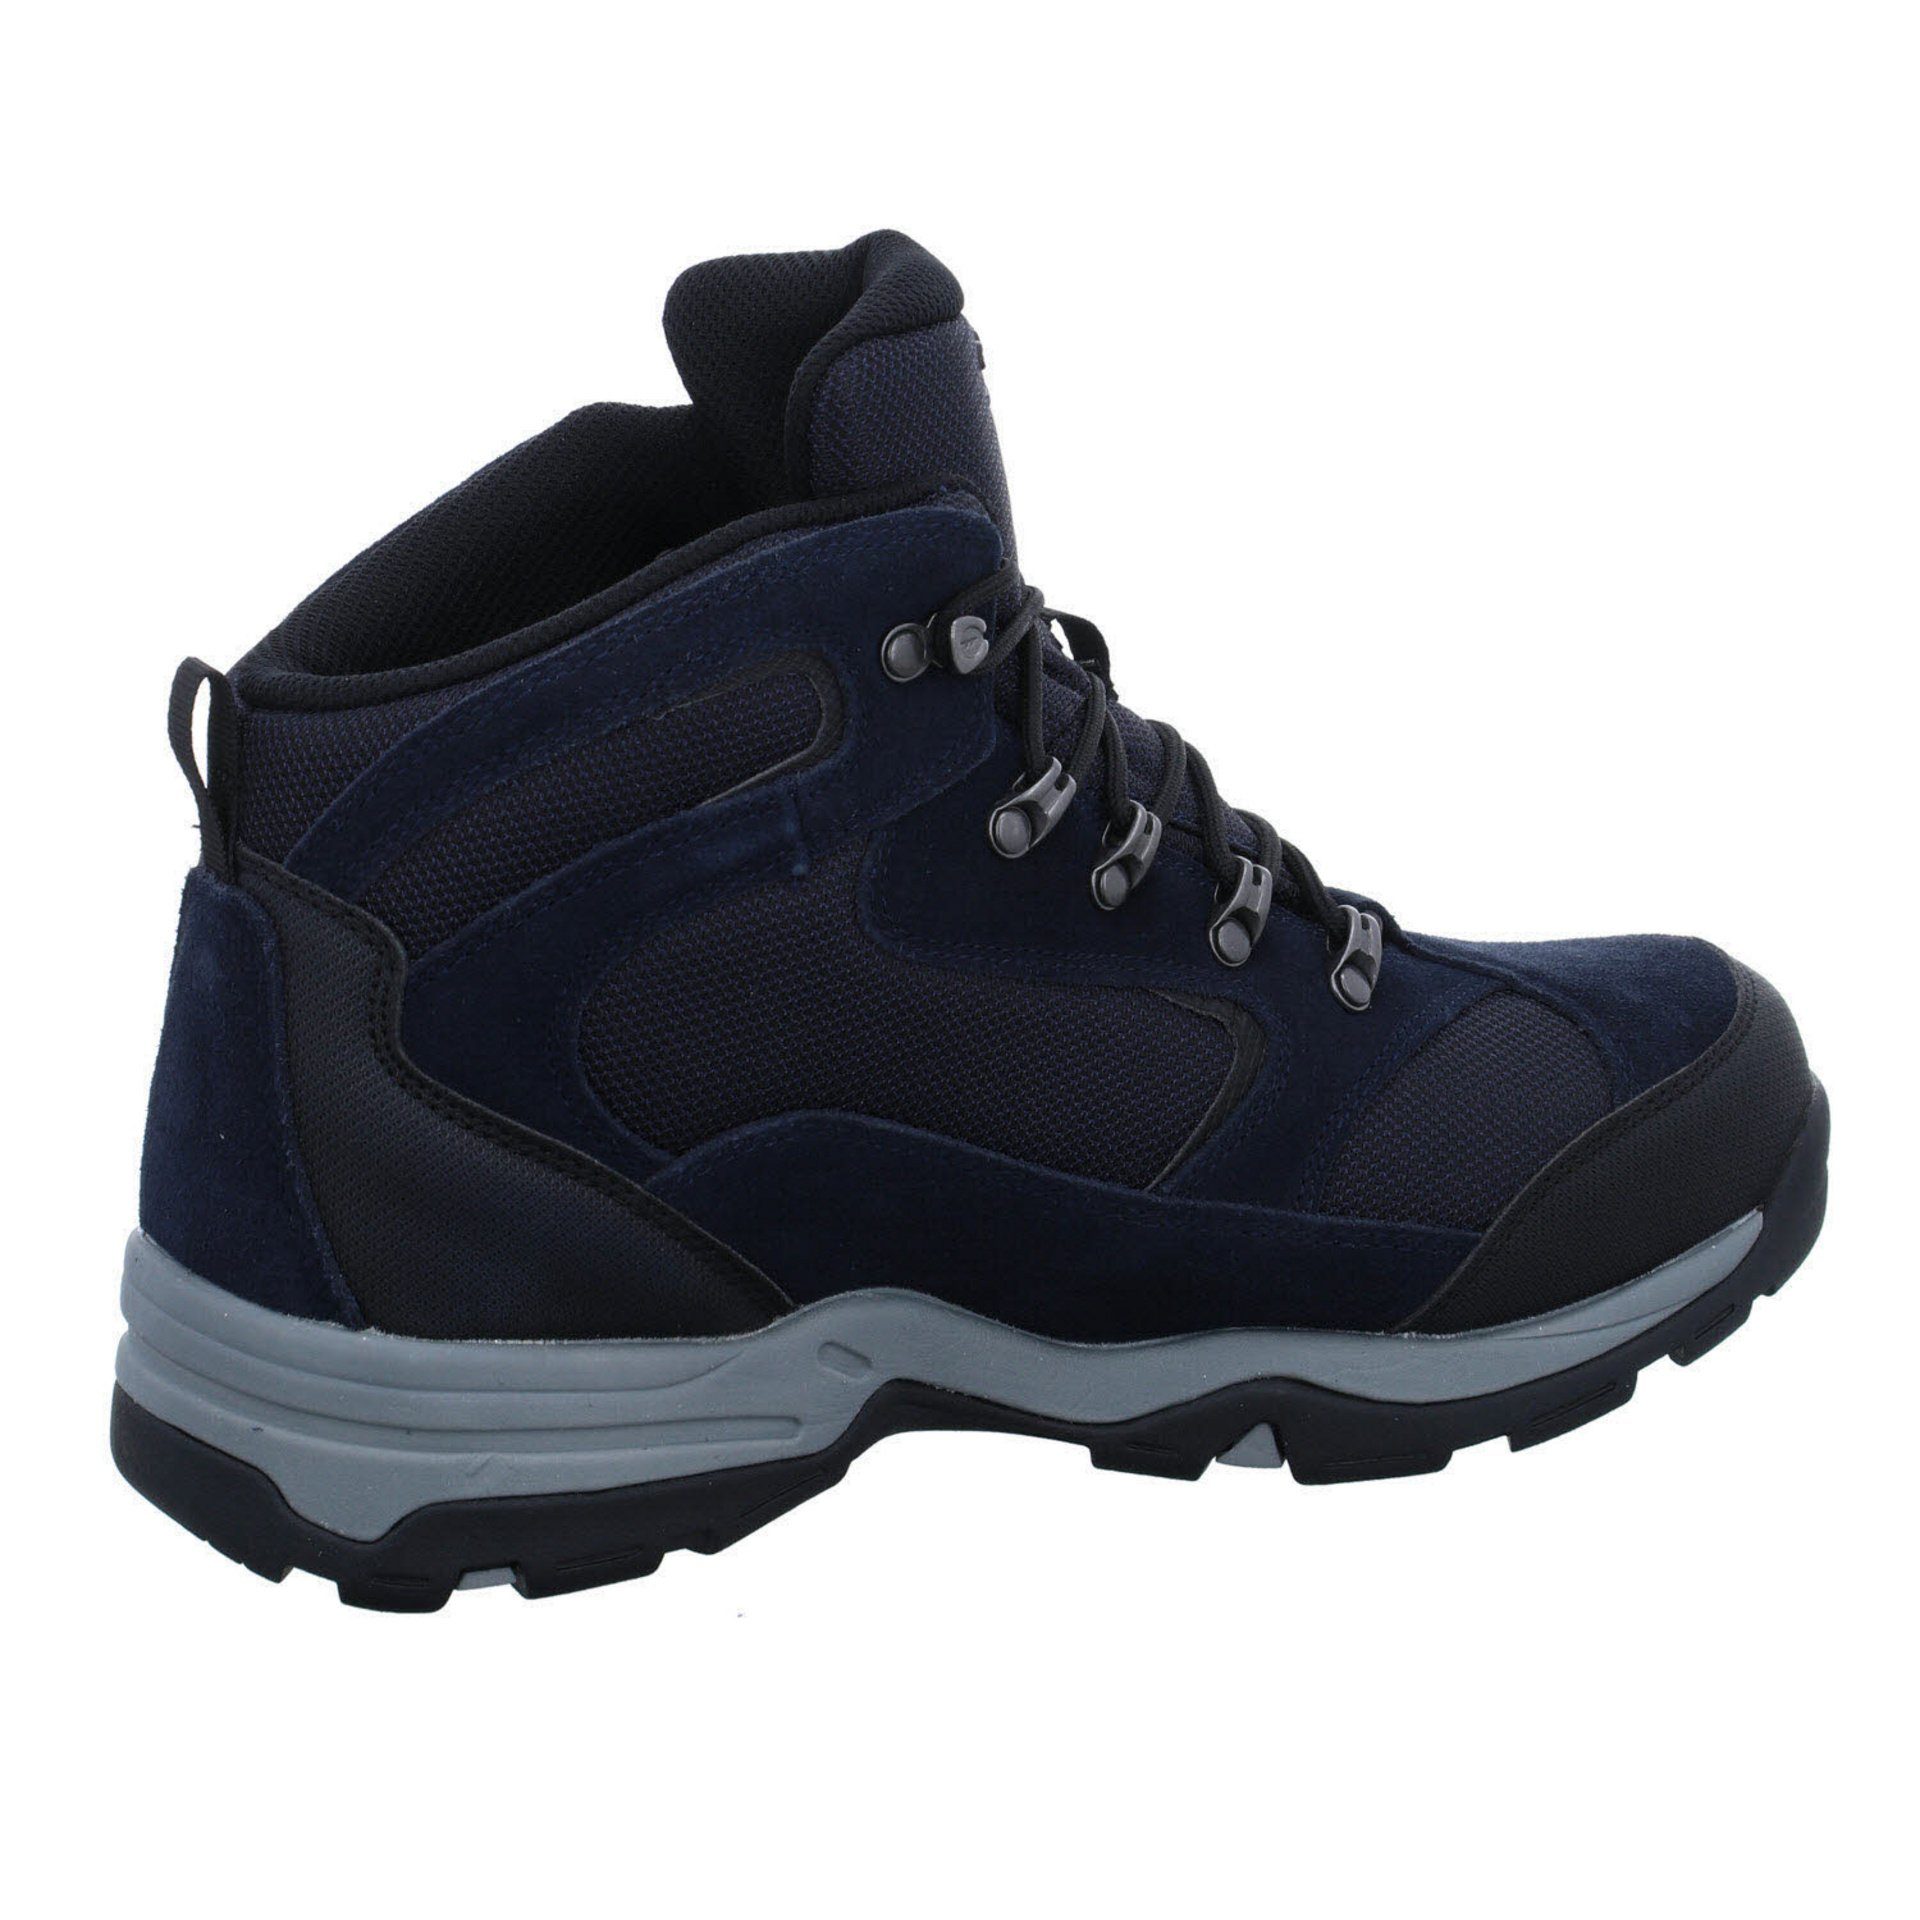 WP HI-TEC work Outdoor Leder-/Textilkombination Herren Outdoorschuh Schuhe Storm Hi-Tec sonst Kombi Outdoorschuh blau